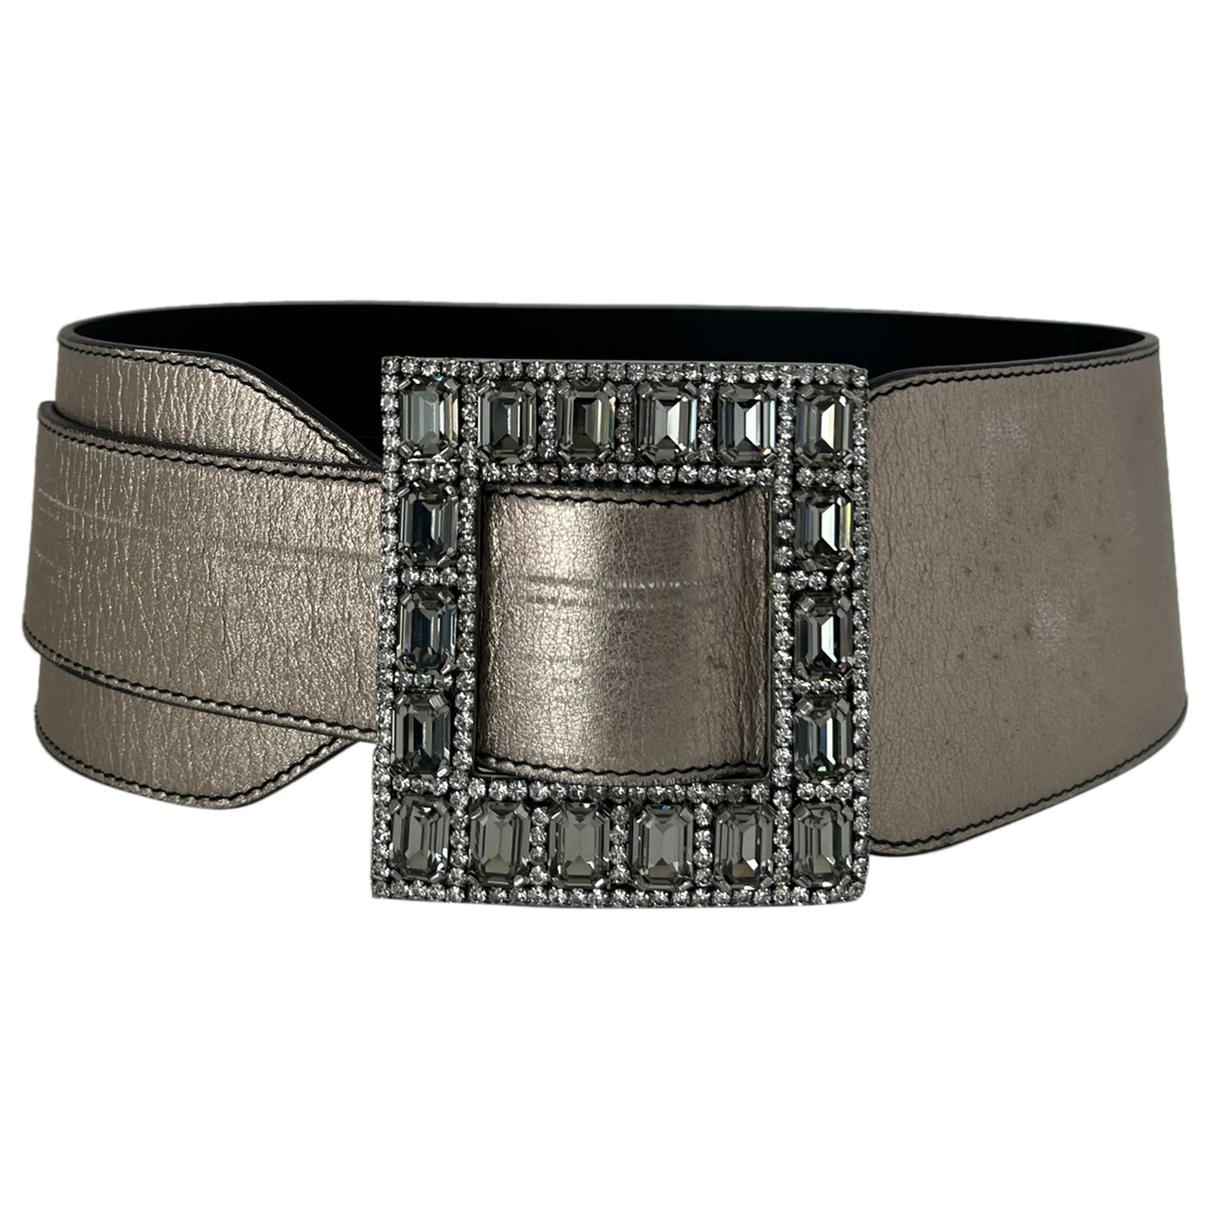 accessories Valentino Garavani belts for Female Leather 85 cm. Used condition